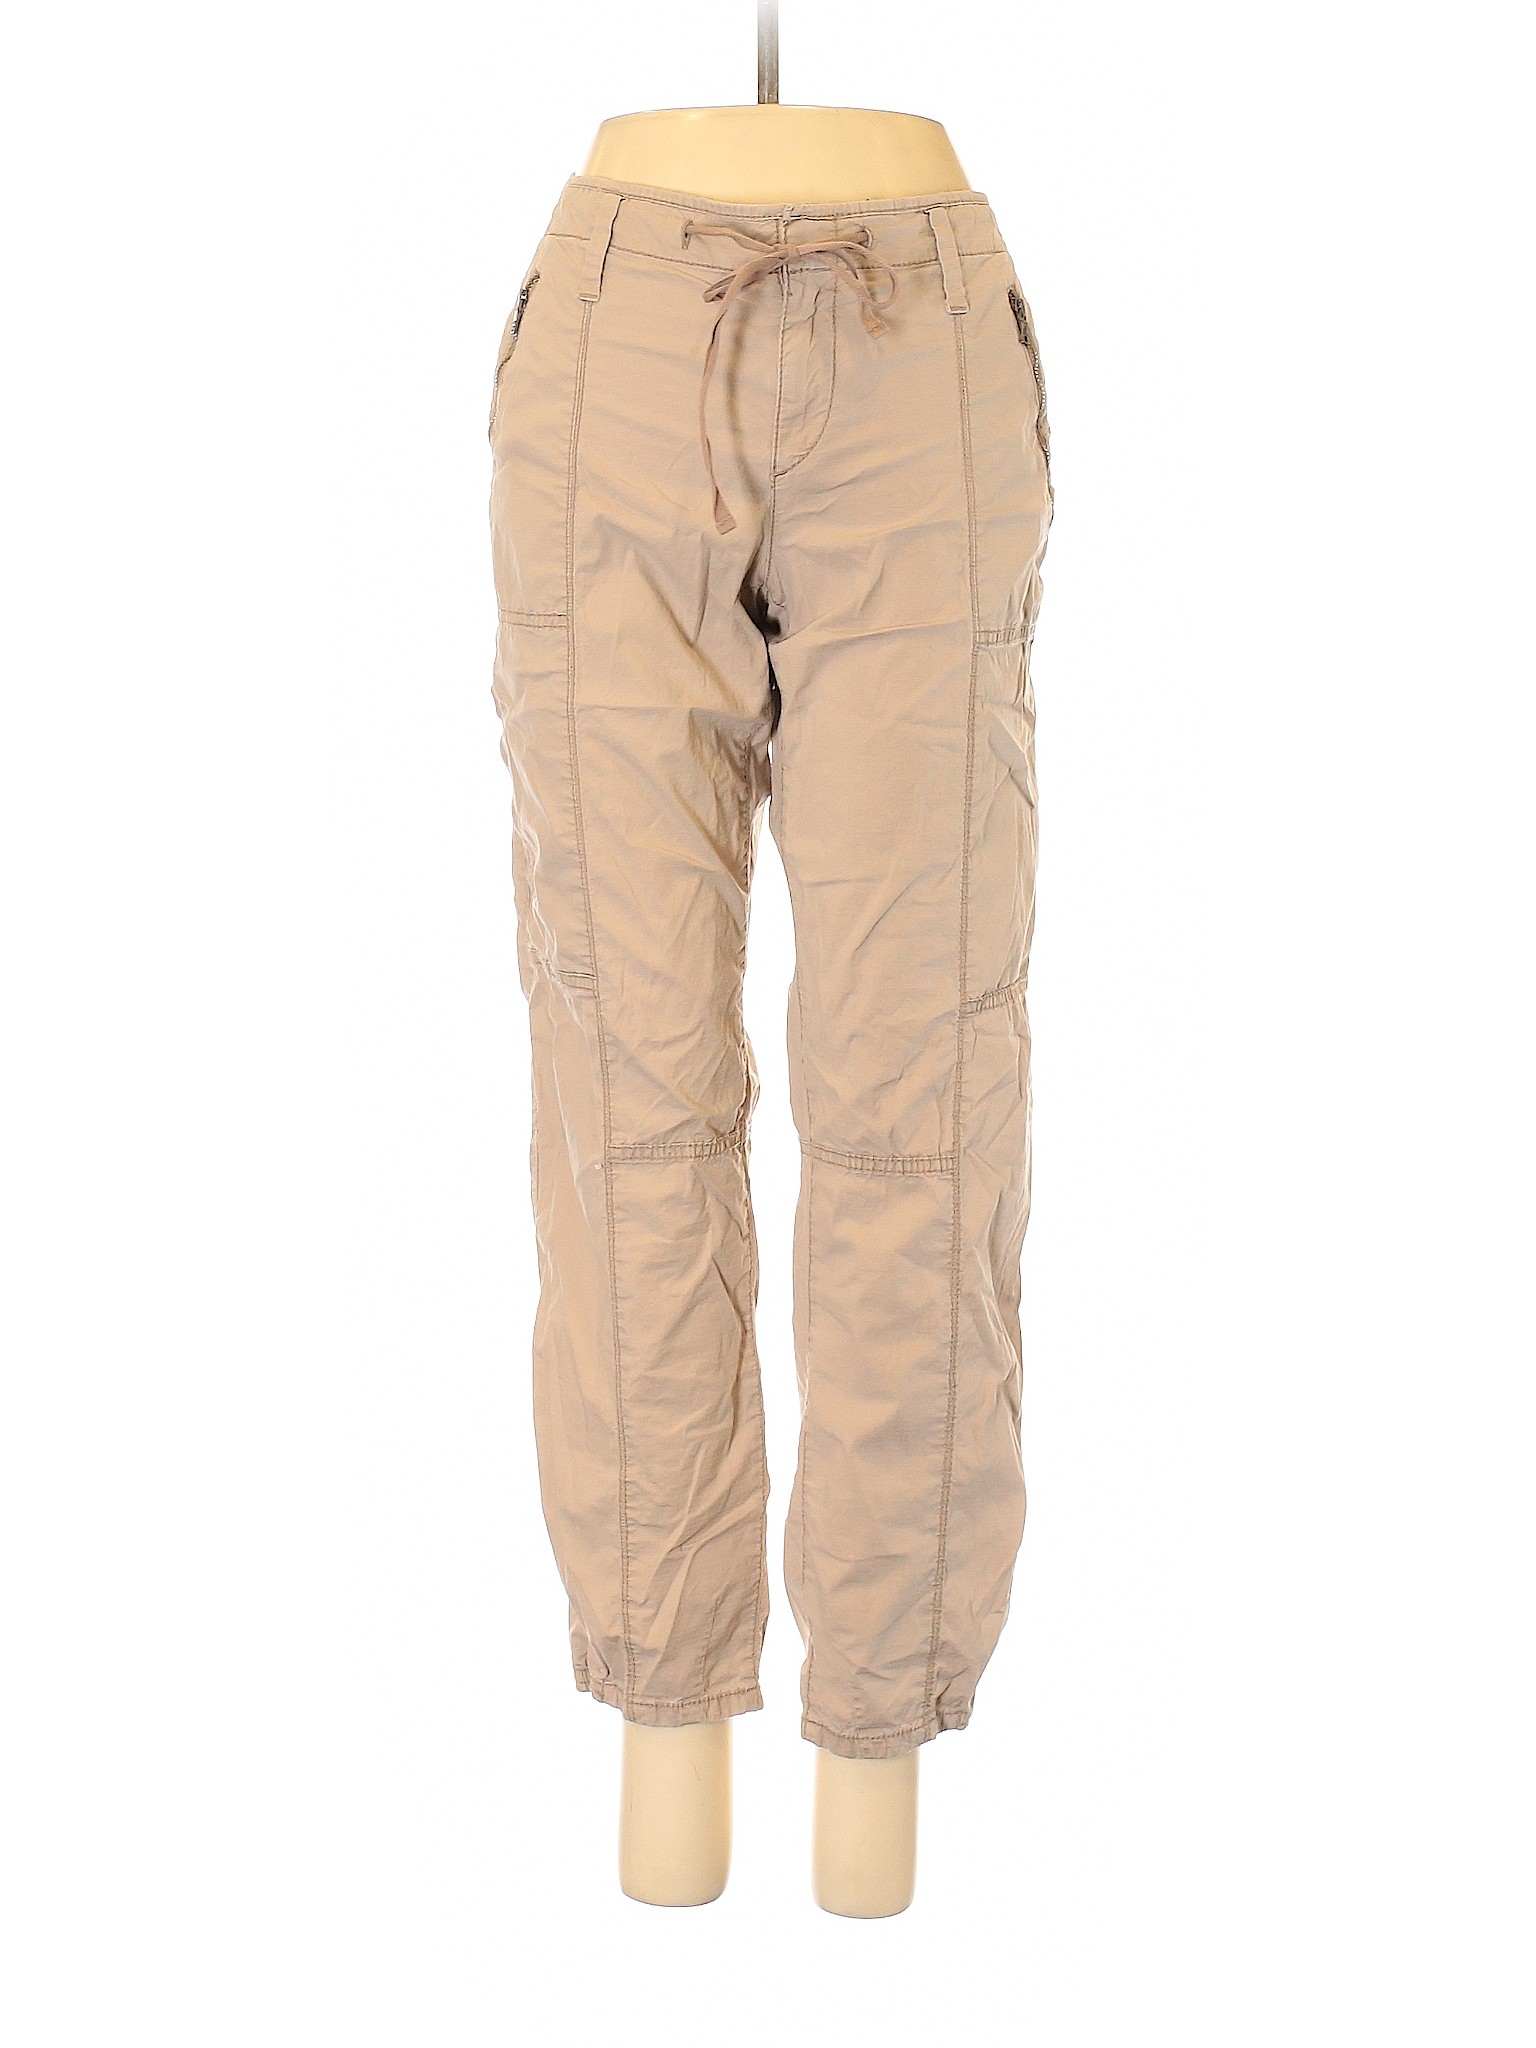 Ann Taylor LOFT Solid Tan Cargo Pants Size 6 - 90% off | thredUP